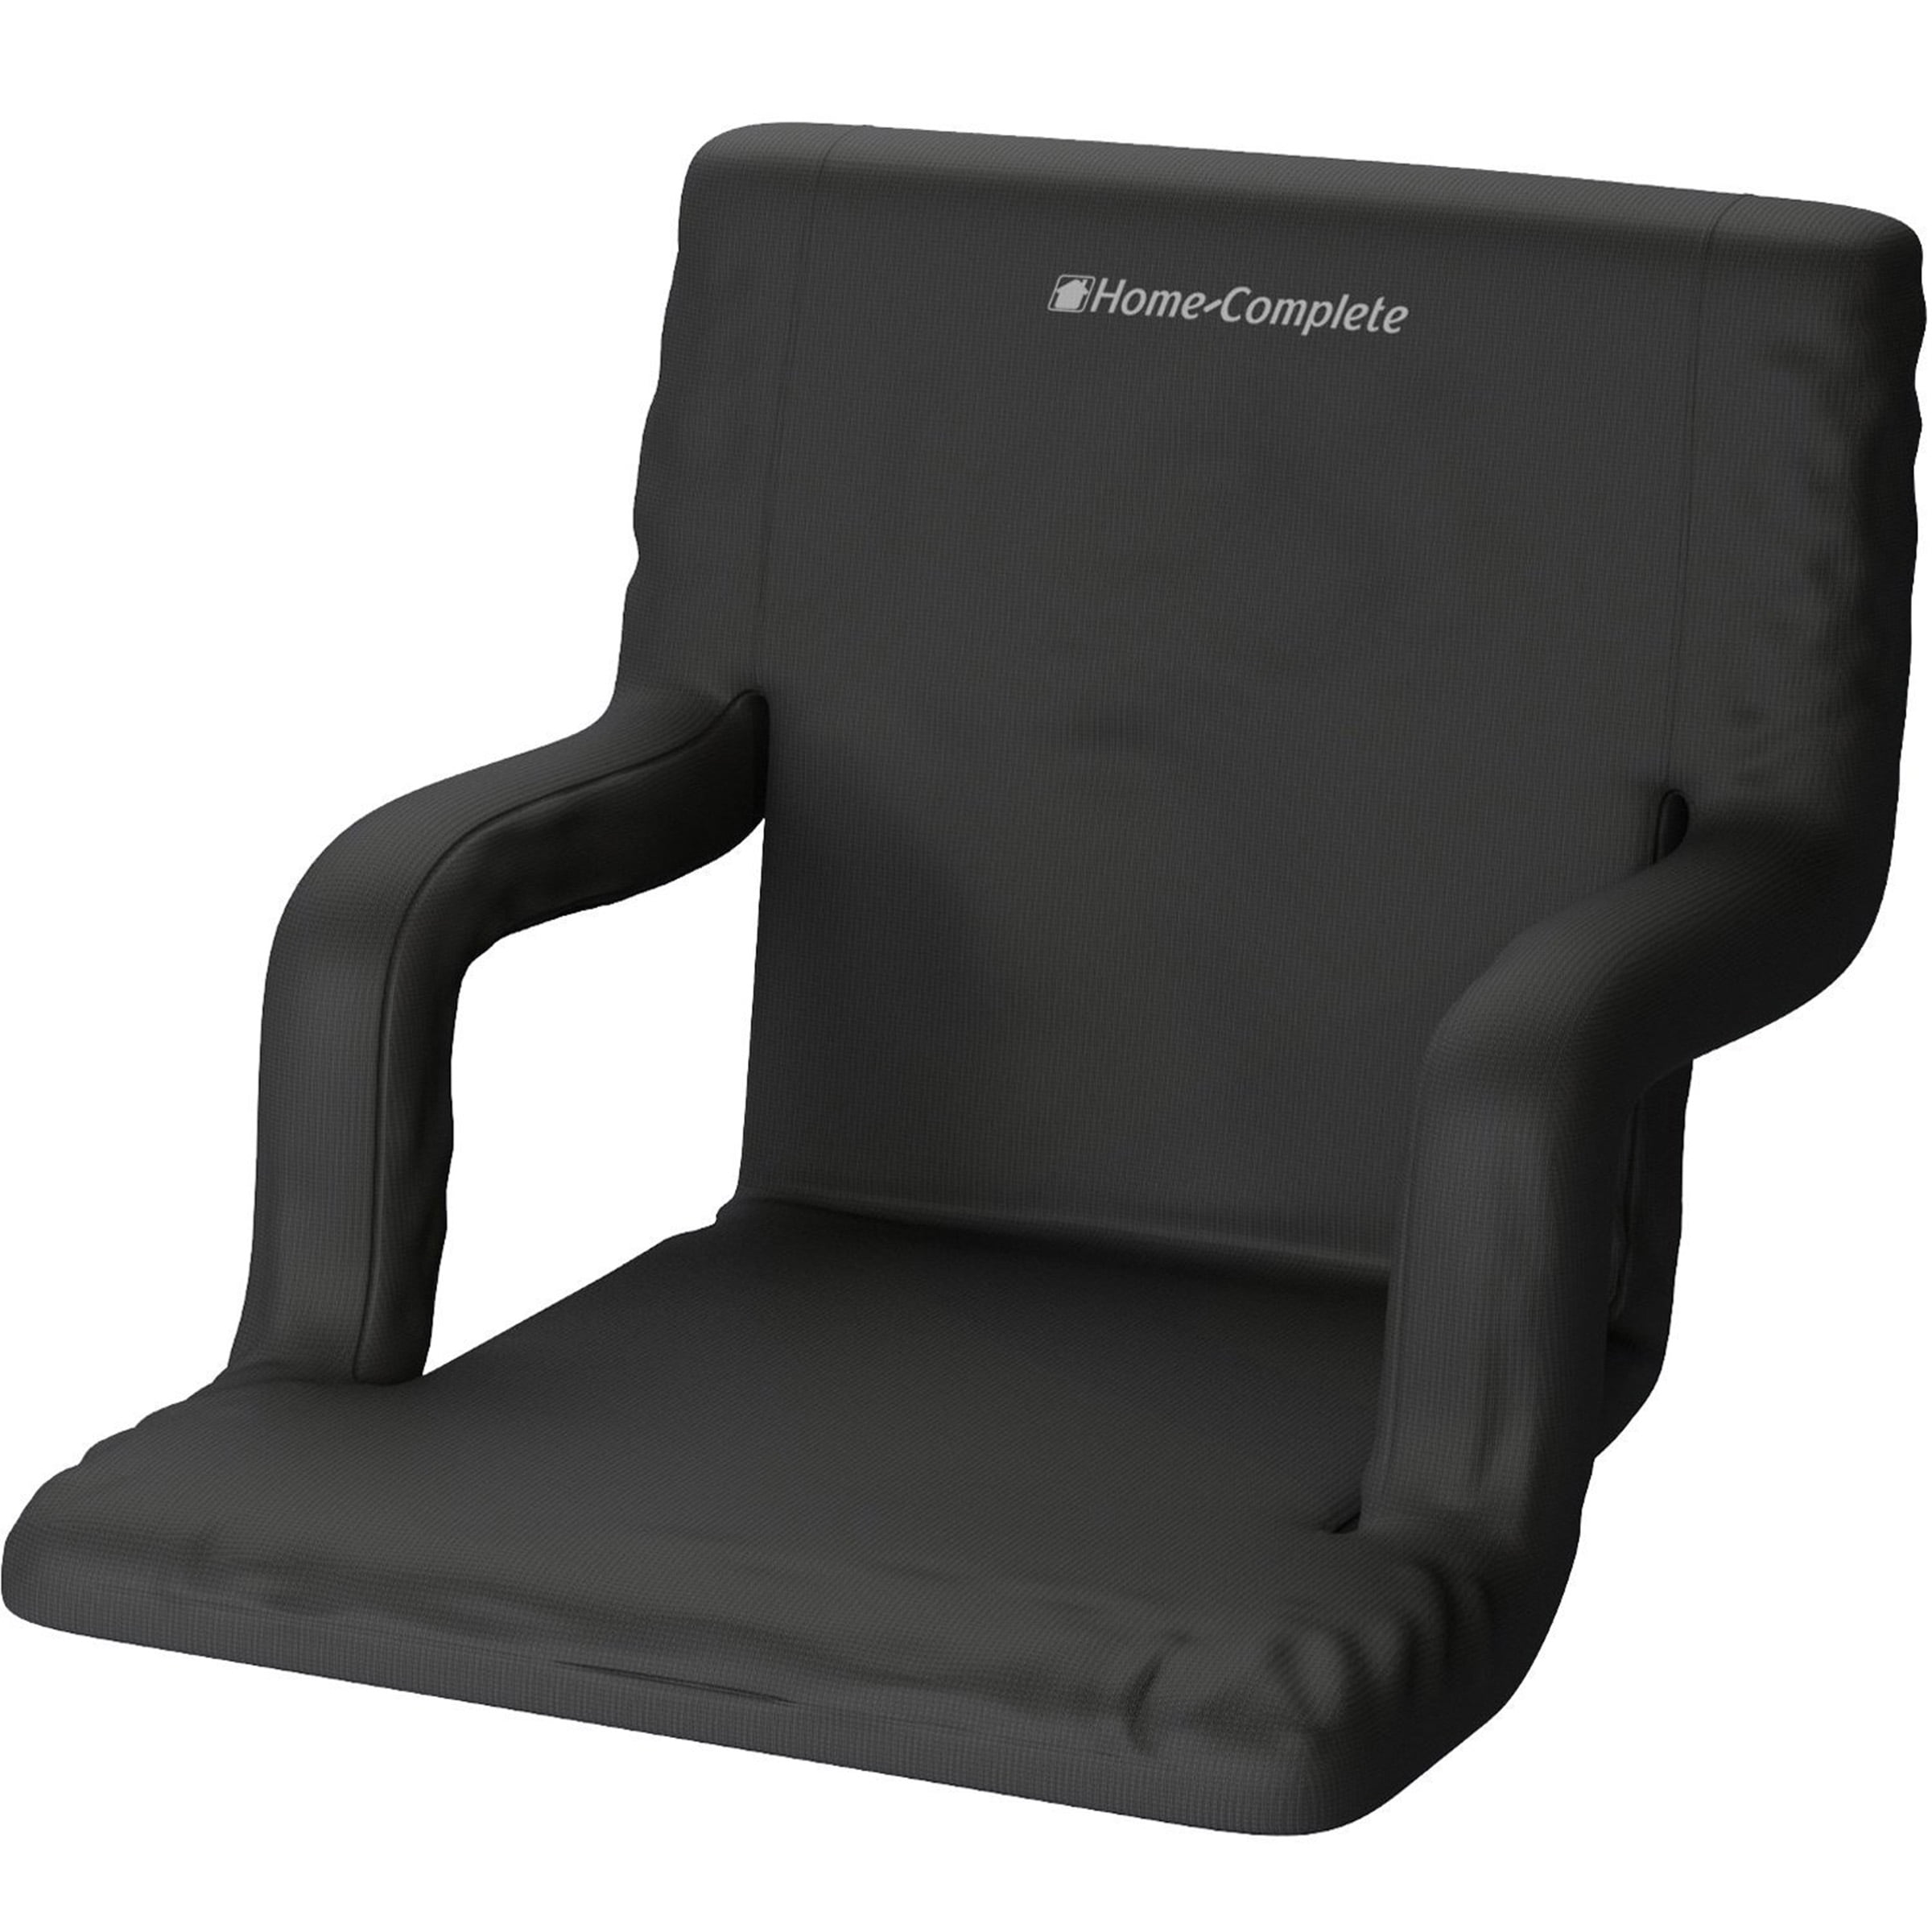 Portable Bleacher Stadium Chair Seat Cushion With Back – Easy